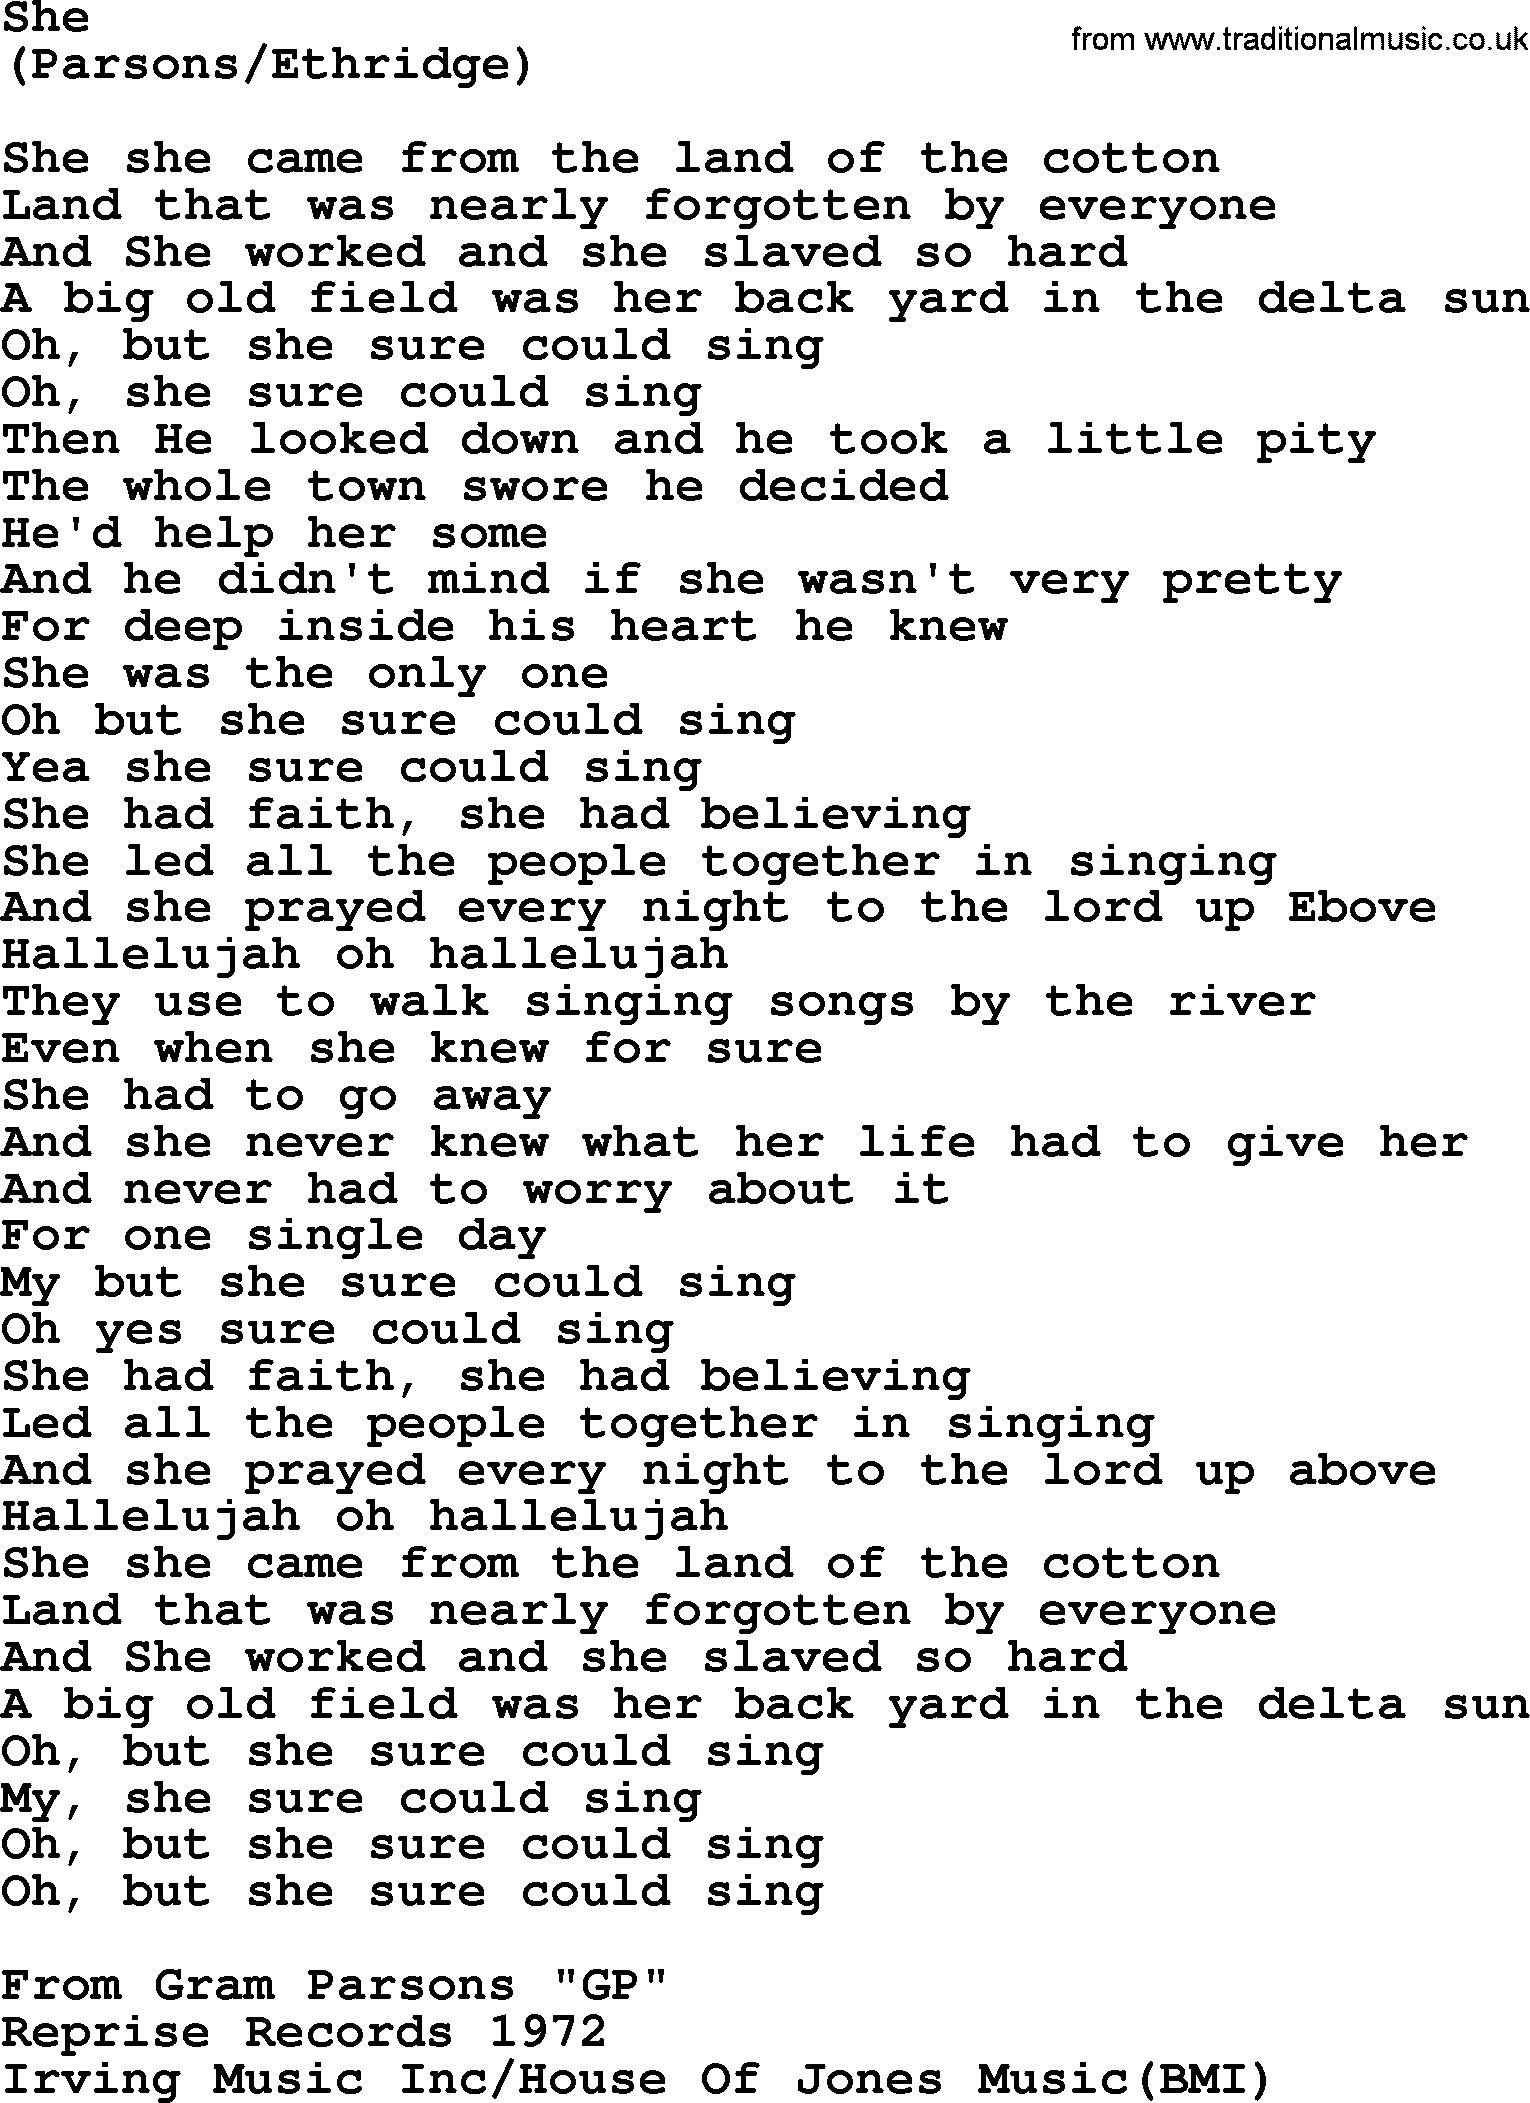 The Byrds song She, lyrics